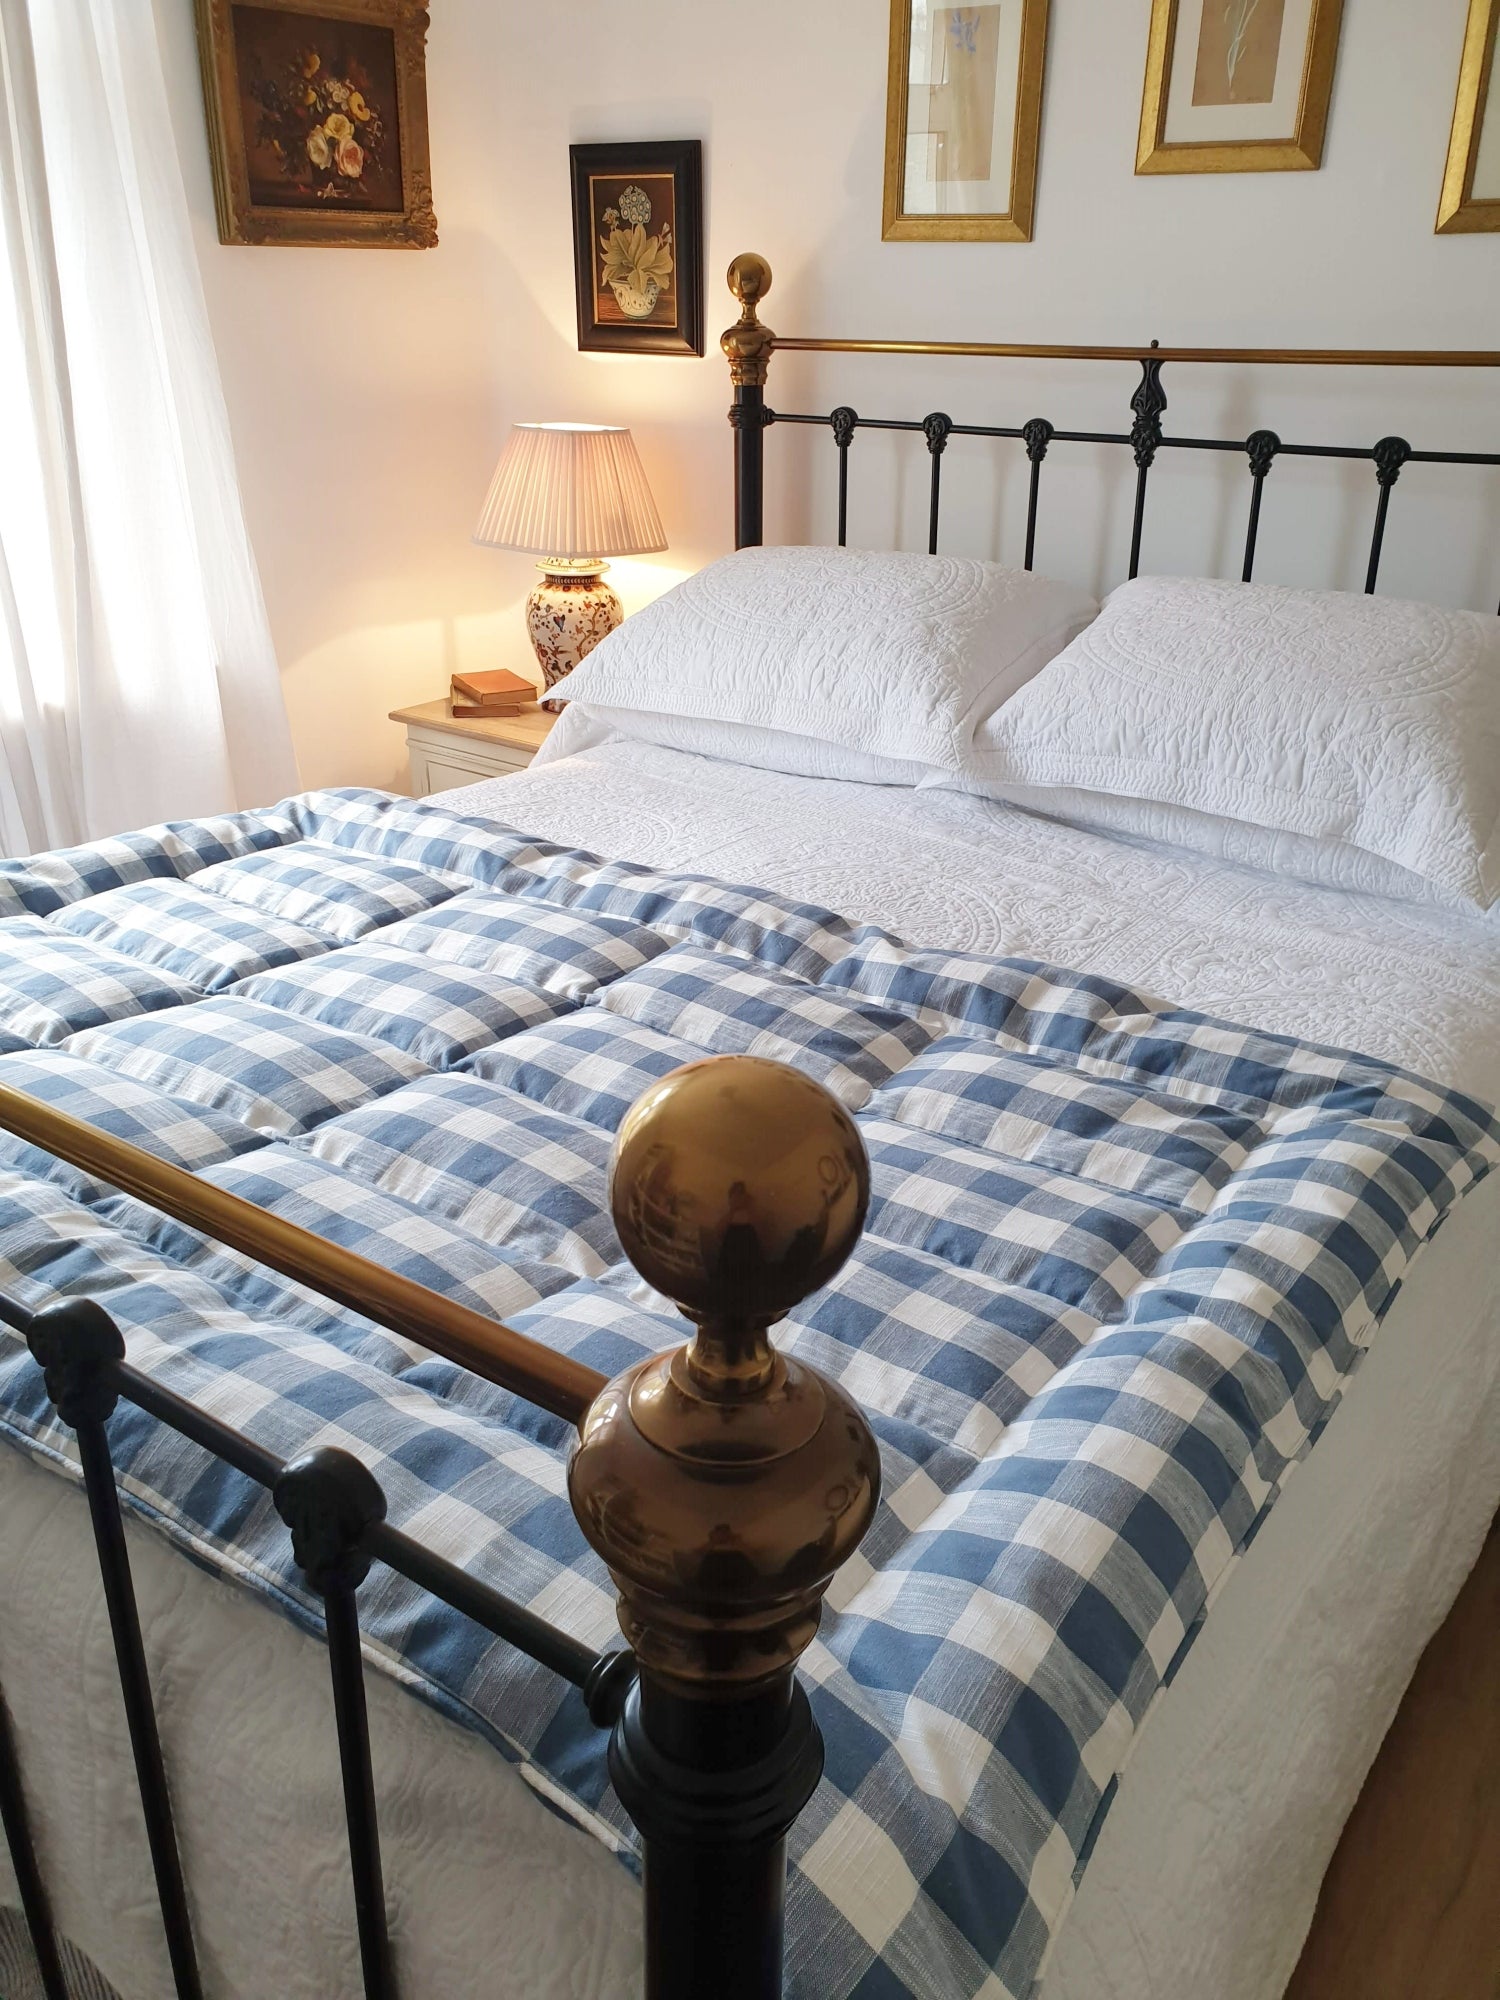 Buffalo Check Eiderdown quilt in pretty bedroom